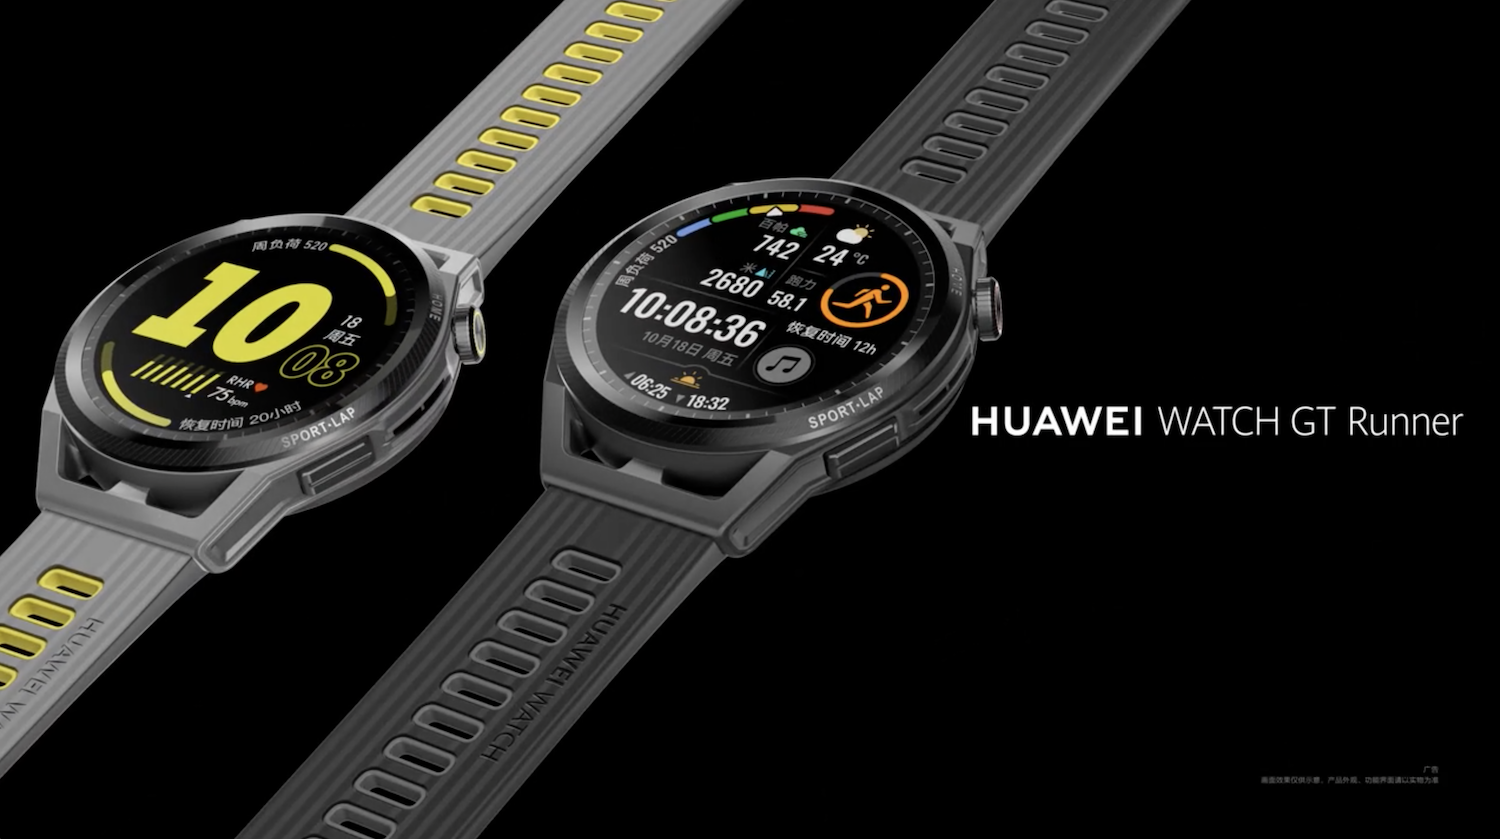 Huawei gt runner купить. Huawei gt3 Runner. Runner часы Huawei. Хуавей вотч gt Runner. Умные часы Huawei gt3 Runner.